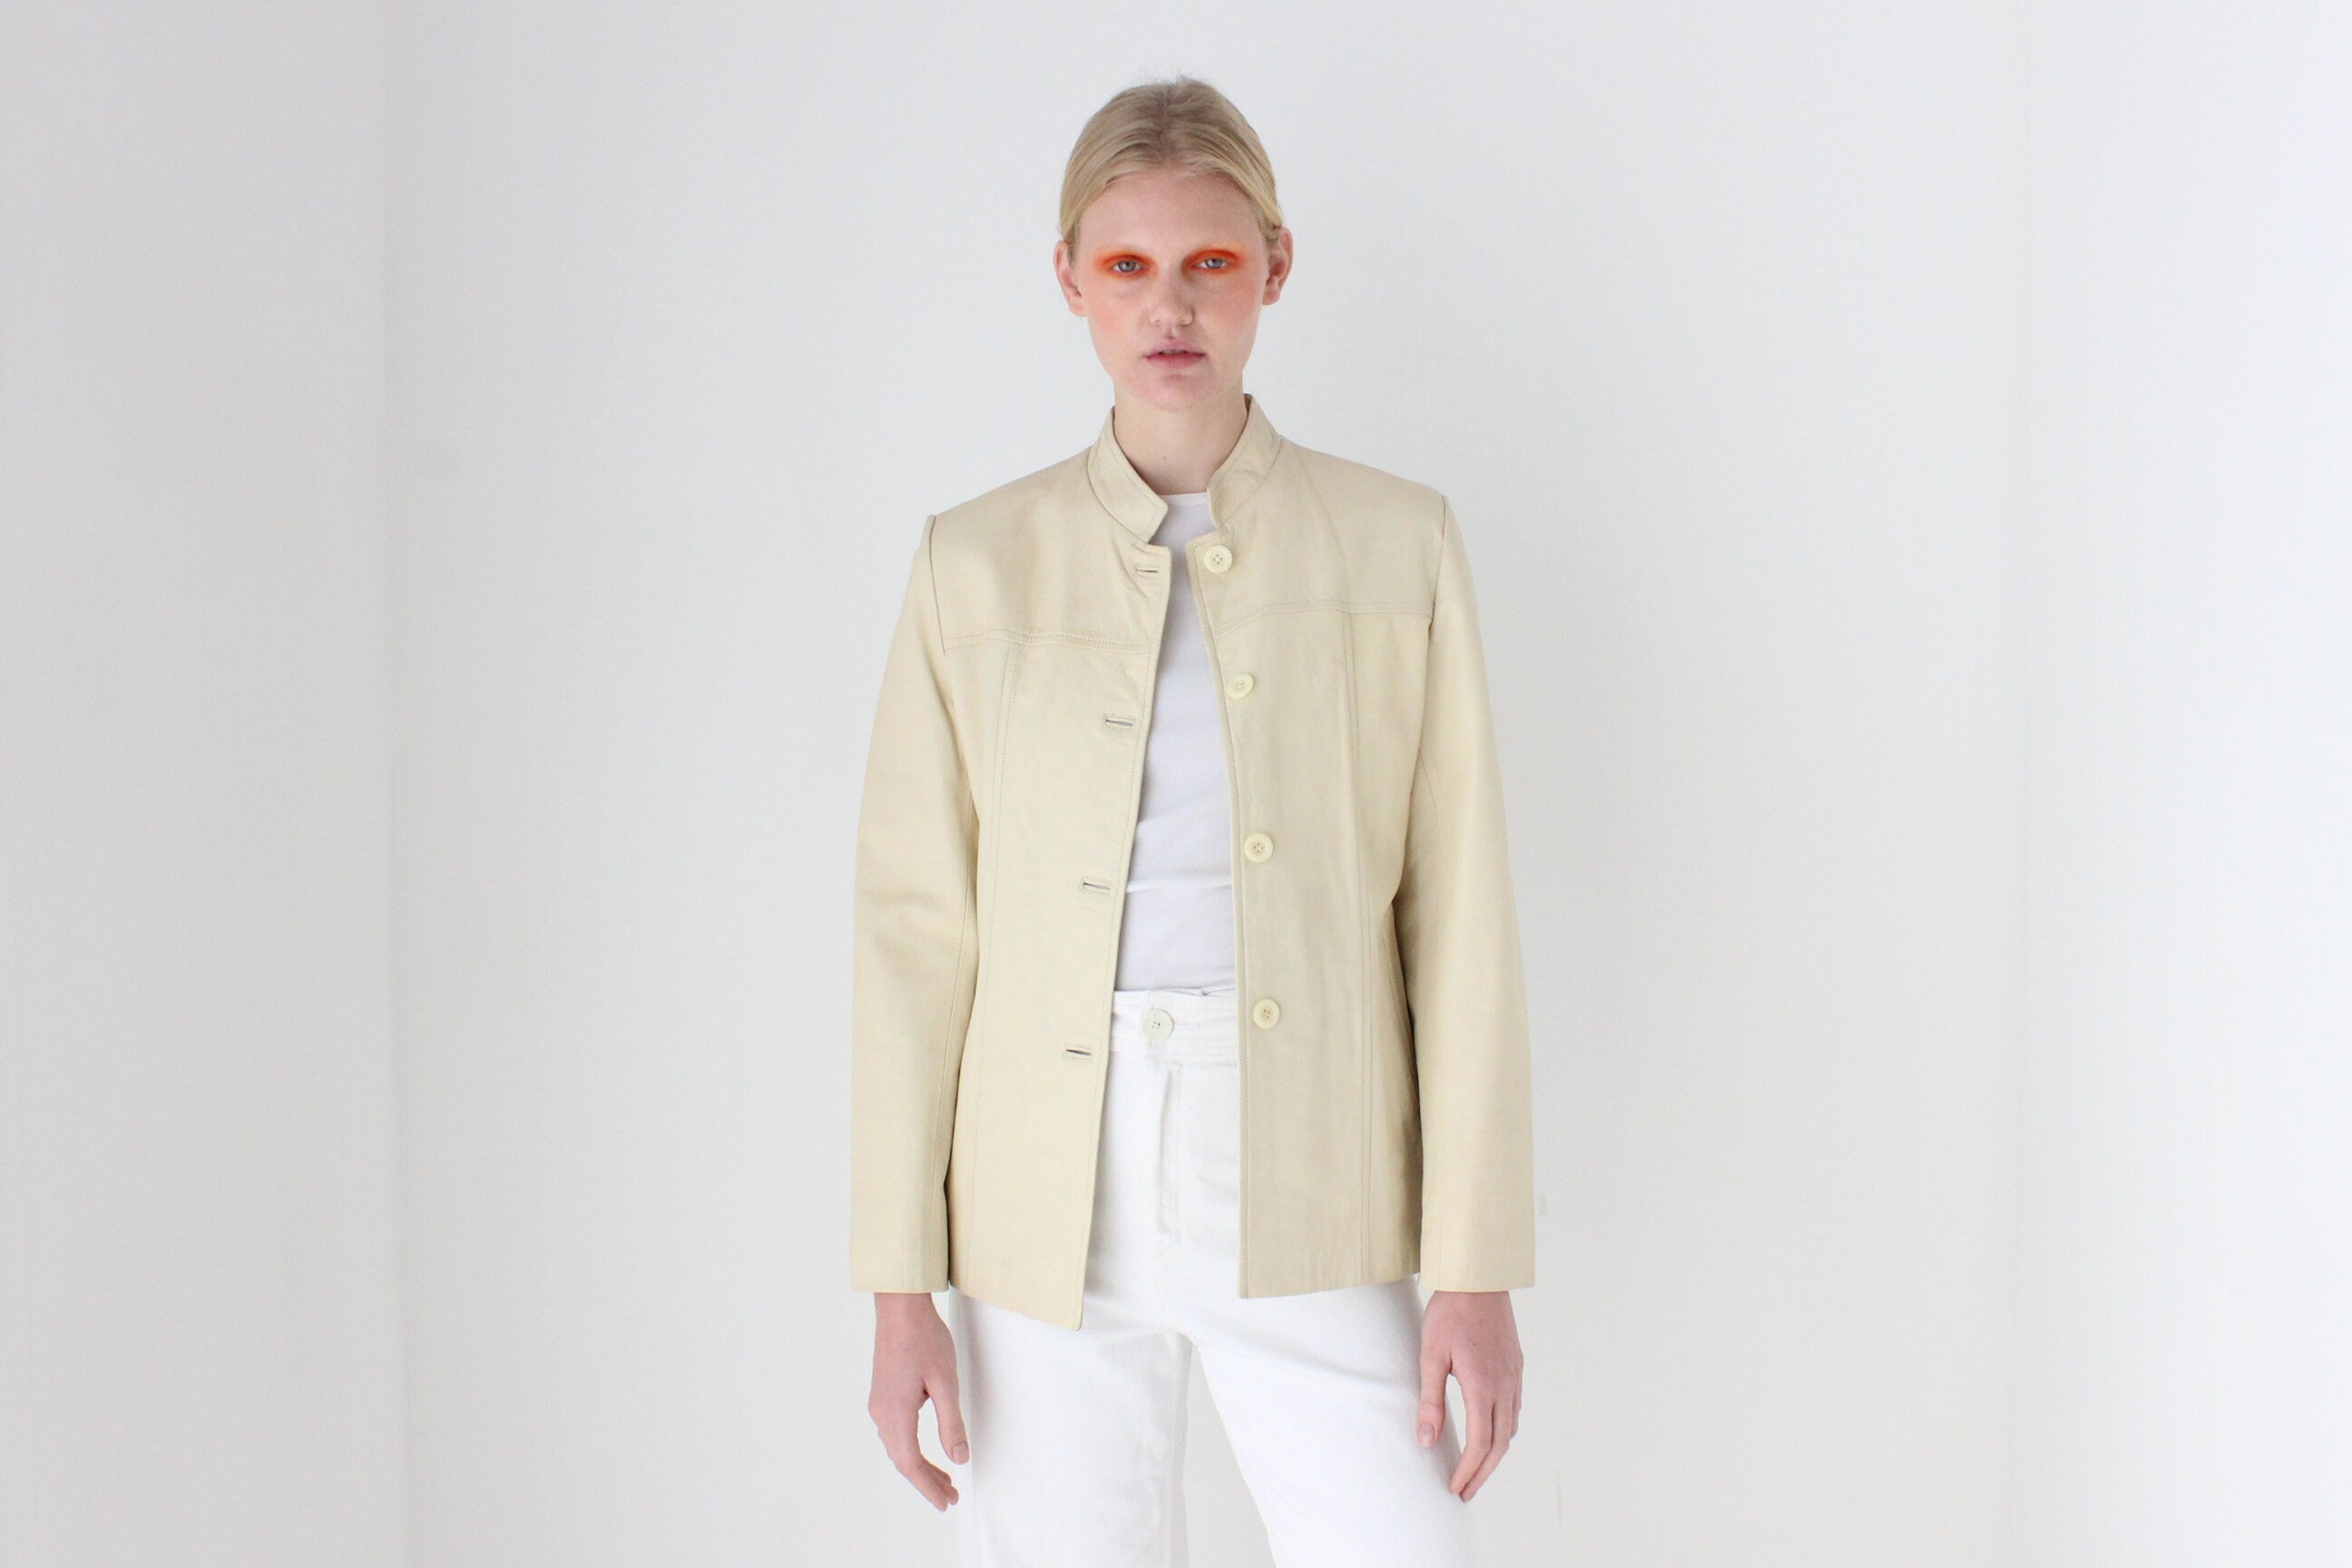 90s Cream Leather Mandarin Collar Jacket